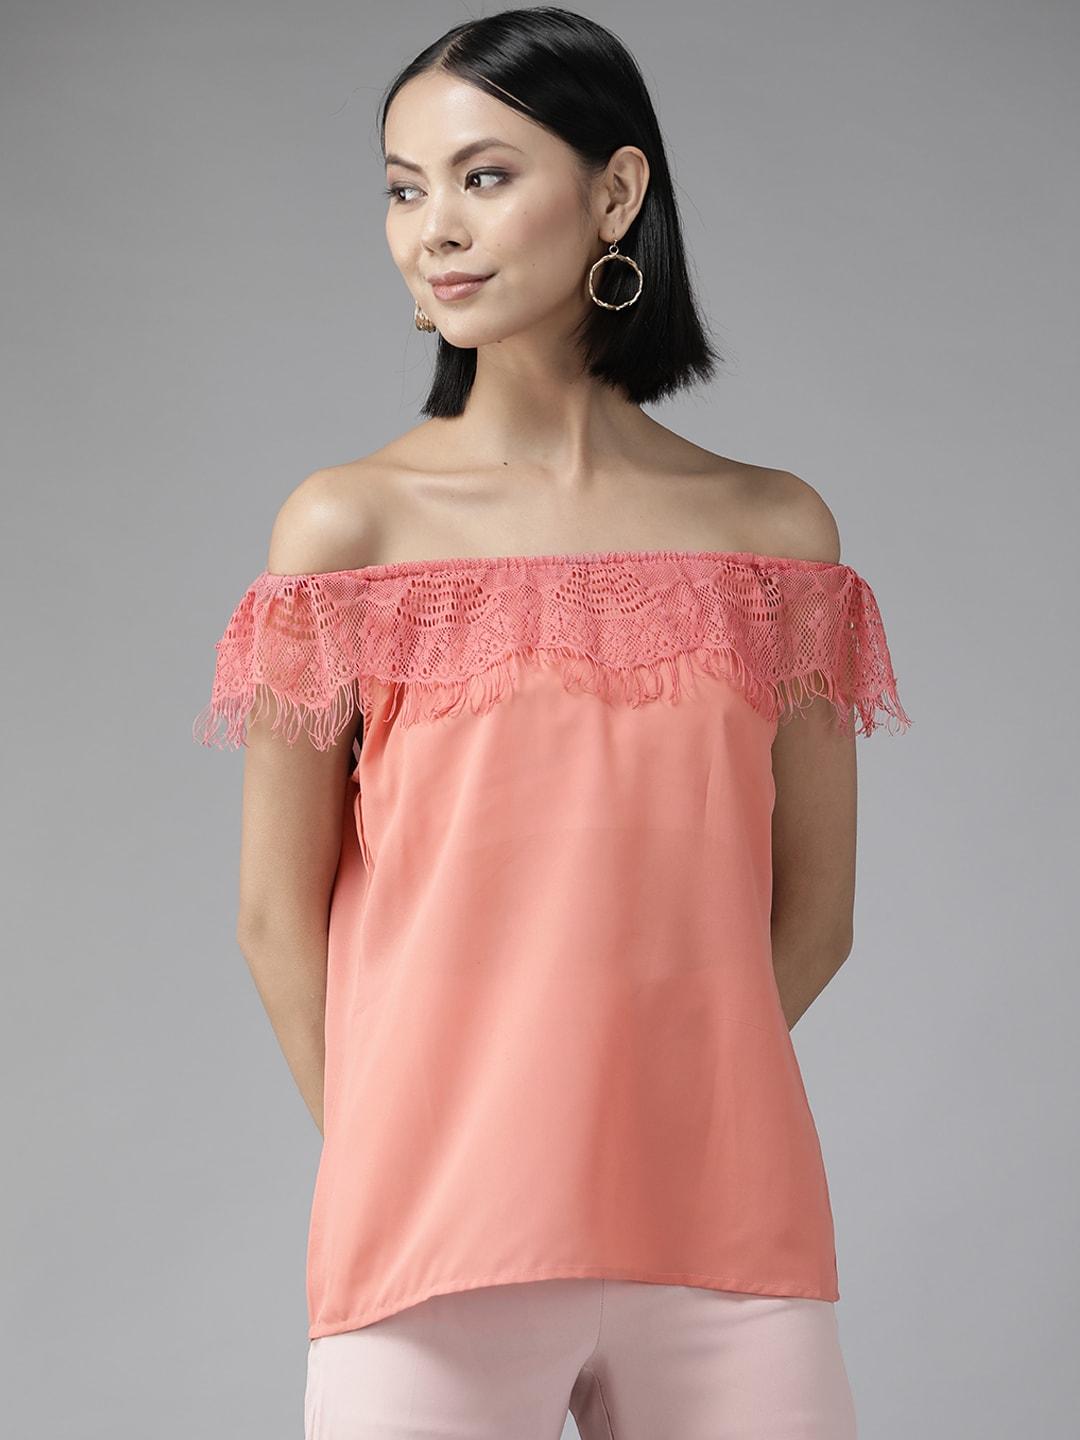 aarika-peach-coloured-off-shoulder-top